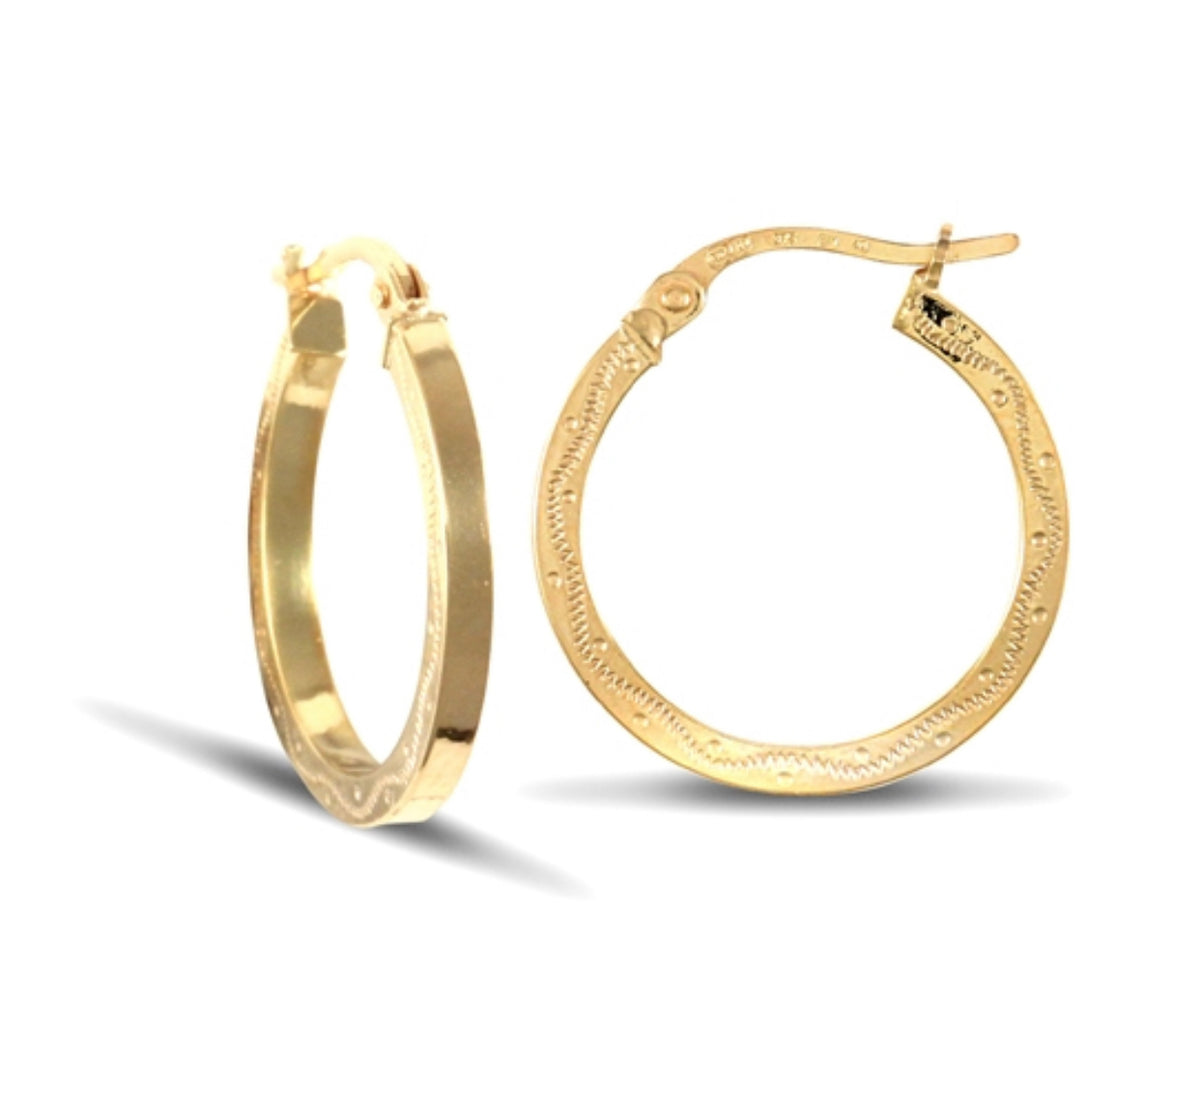 Yellow gold wedding band style earrings 2g